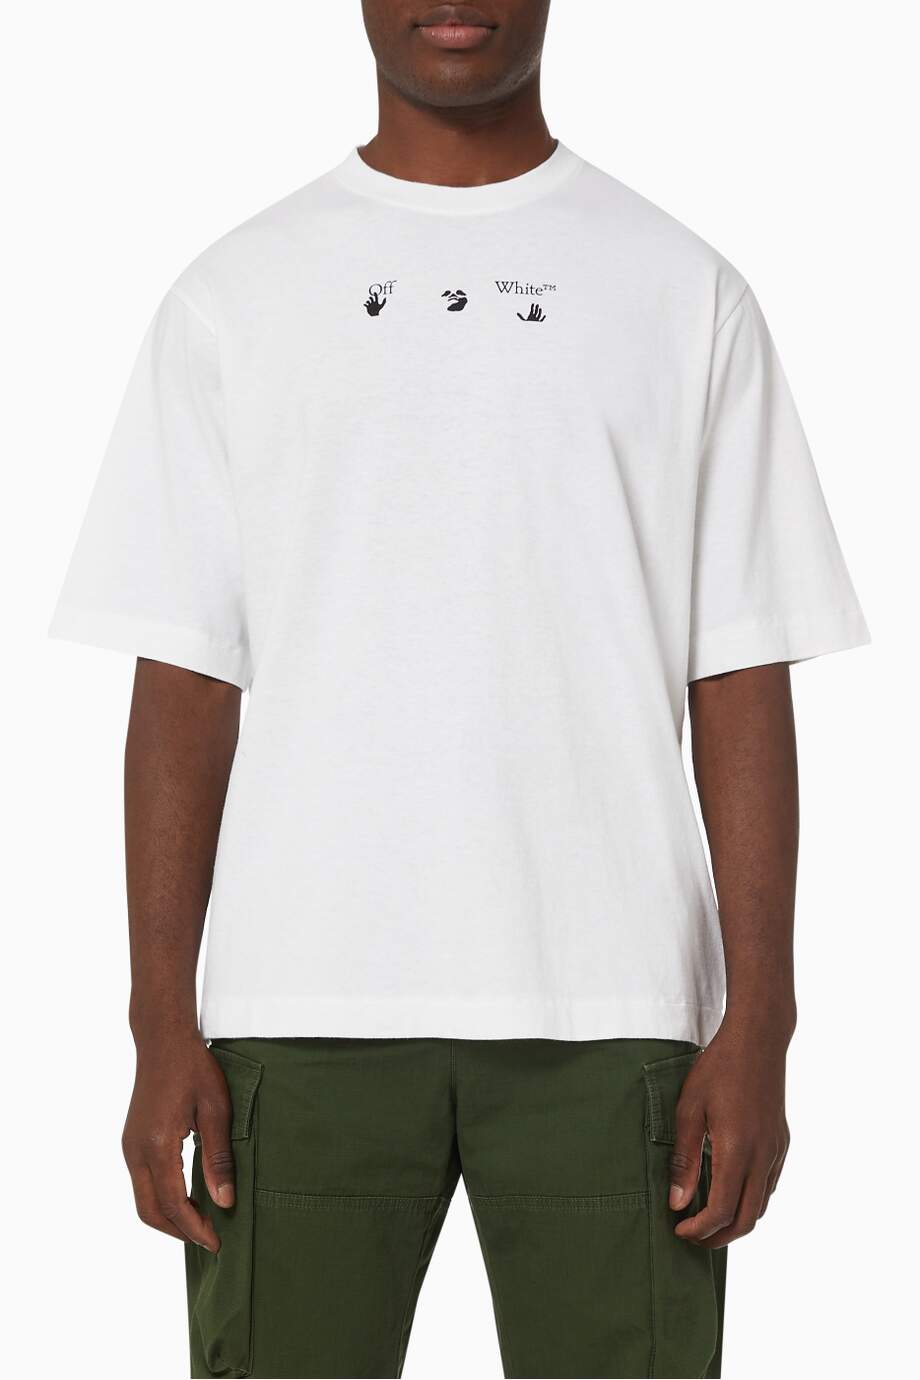 OFF-WHITE Paint Splat Arrows Oversized T-shirt in Cotton Jersey